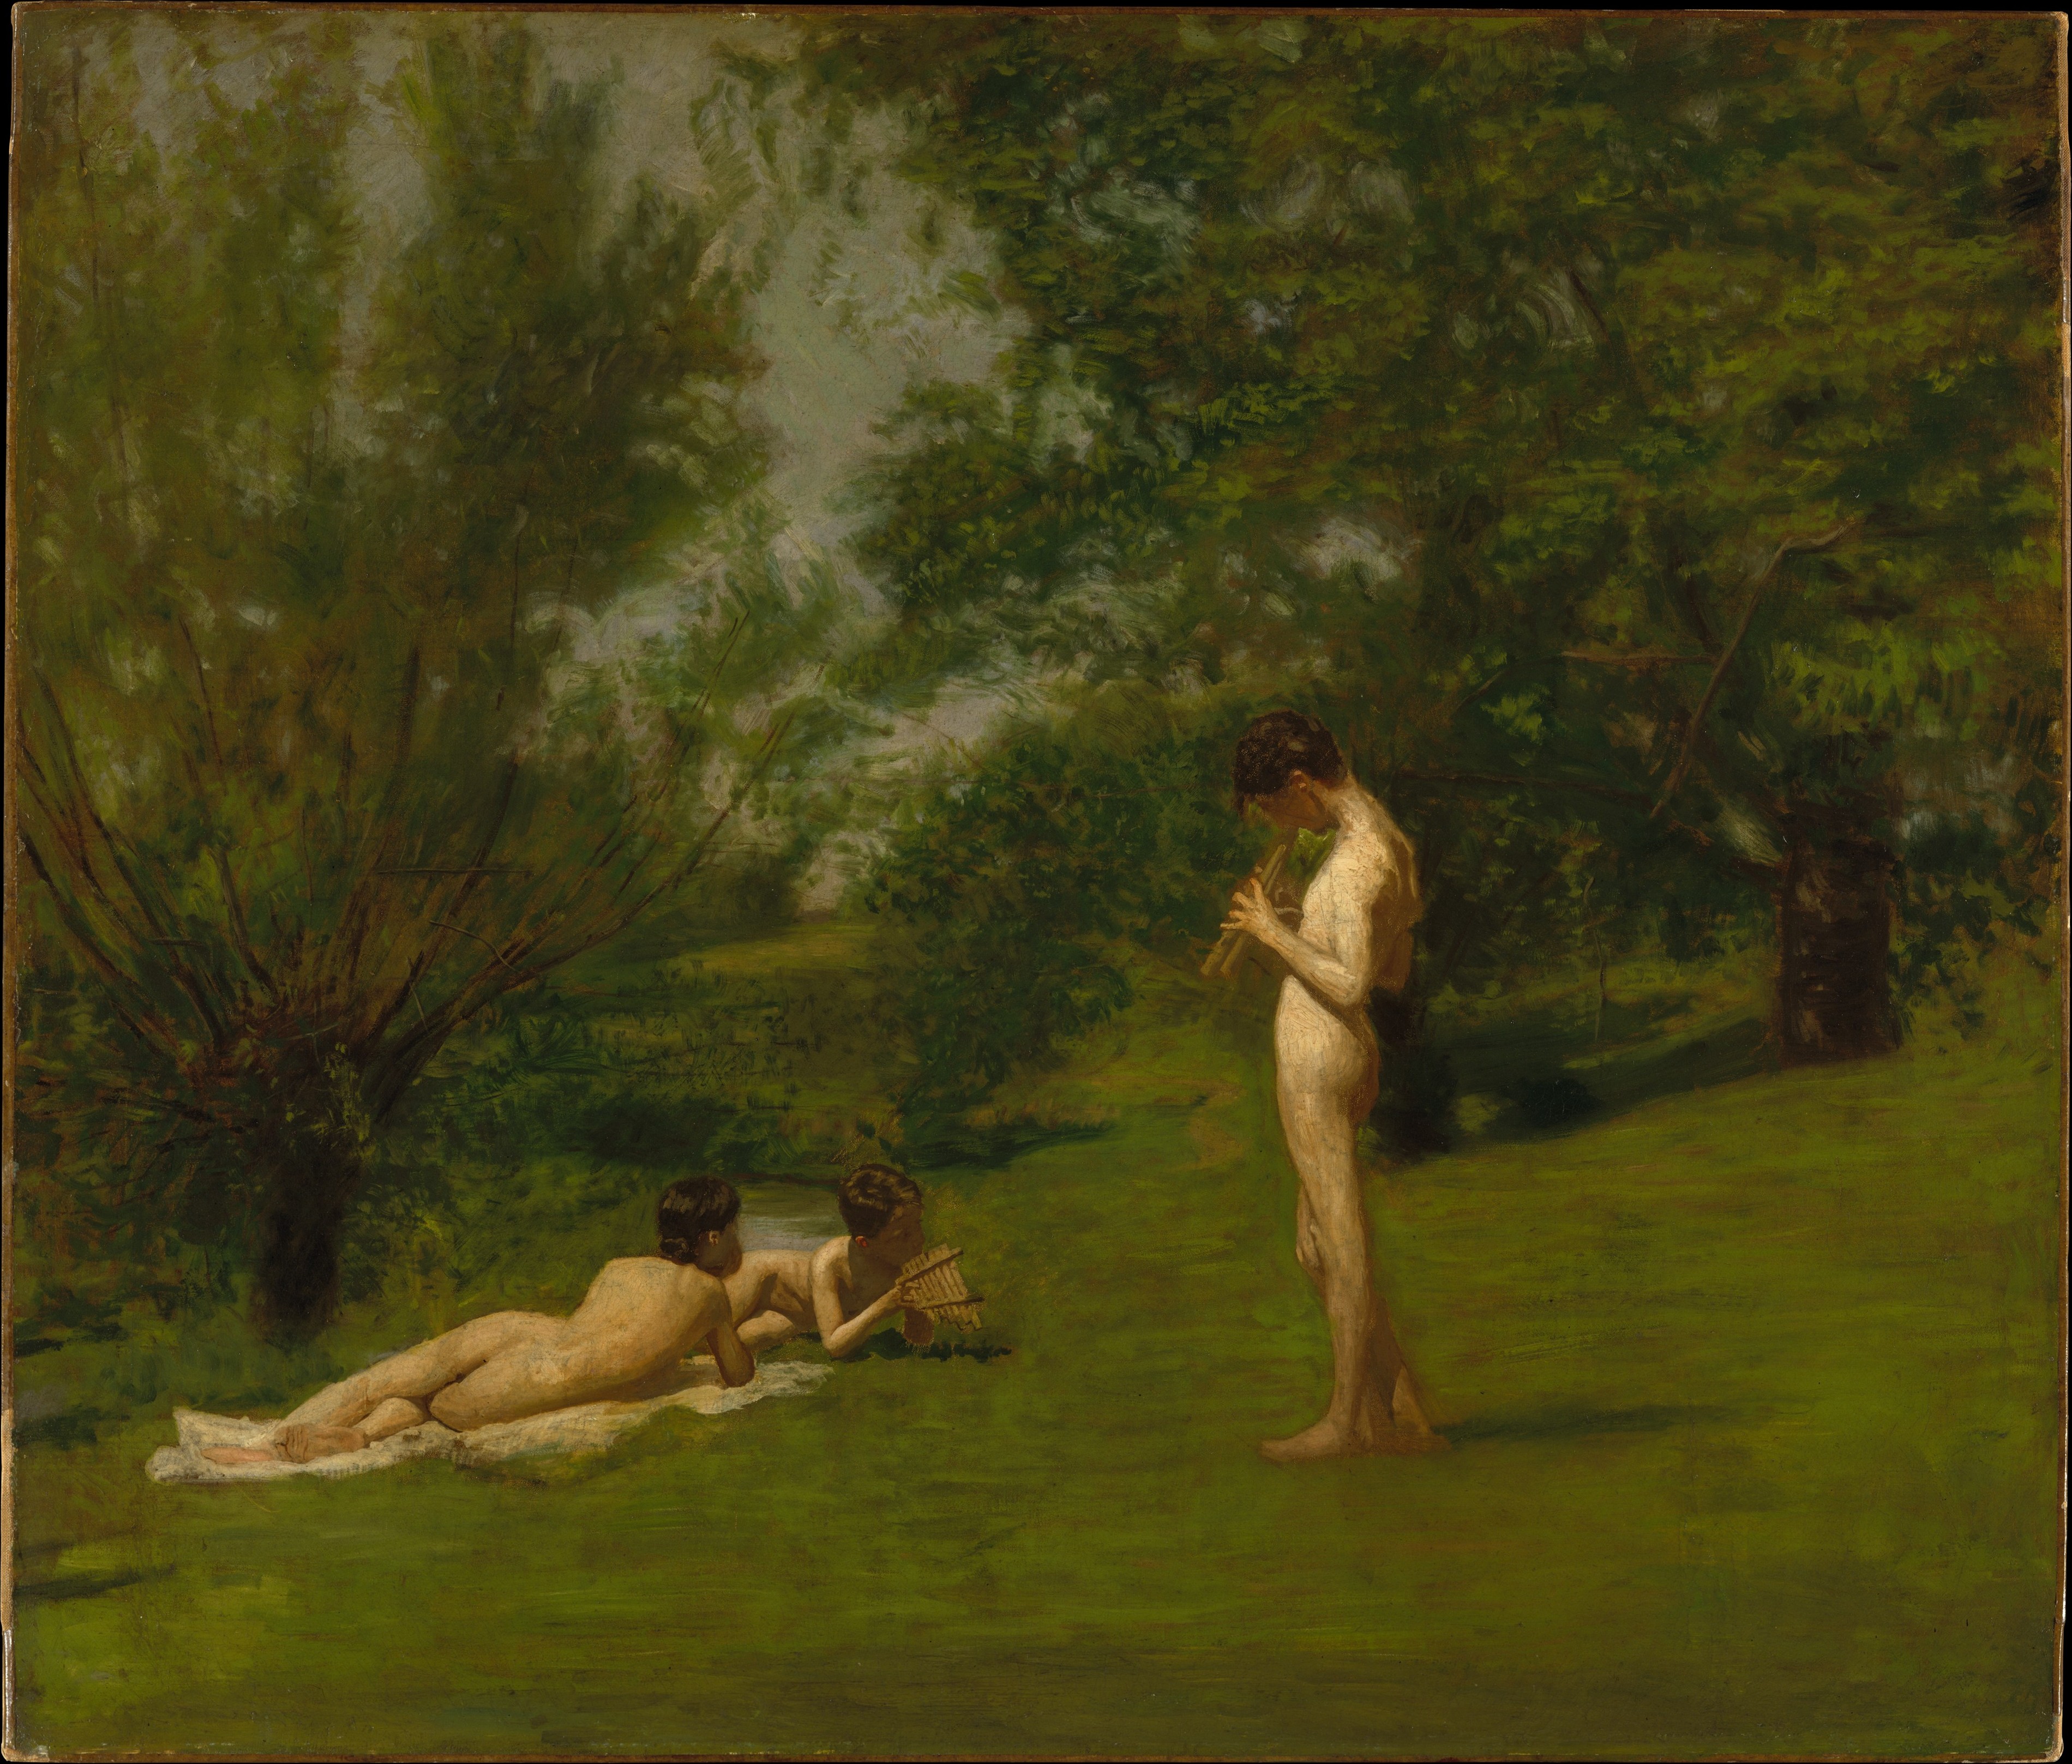 Arcadia by Thomas Eakins - ca. 1883 - 98.1 x 114.3 cm Metropolitan Museum of Art